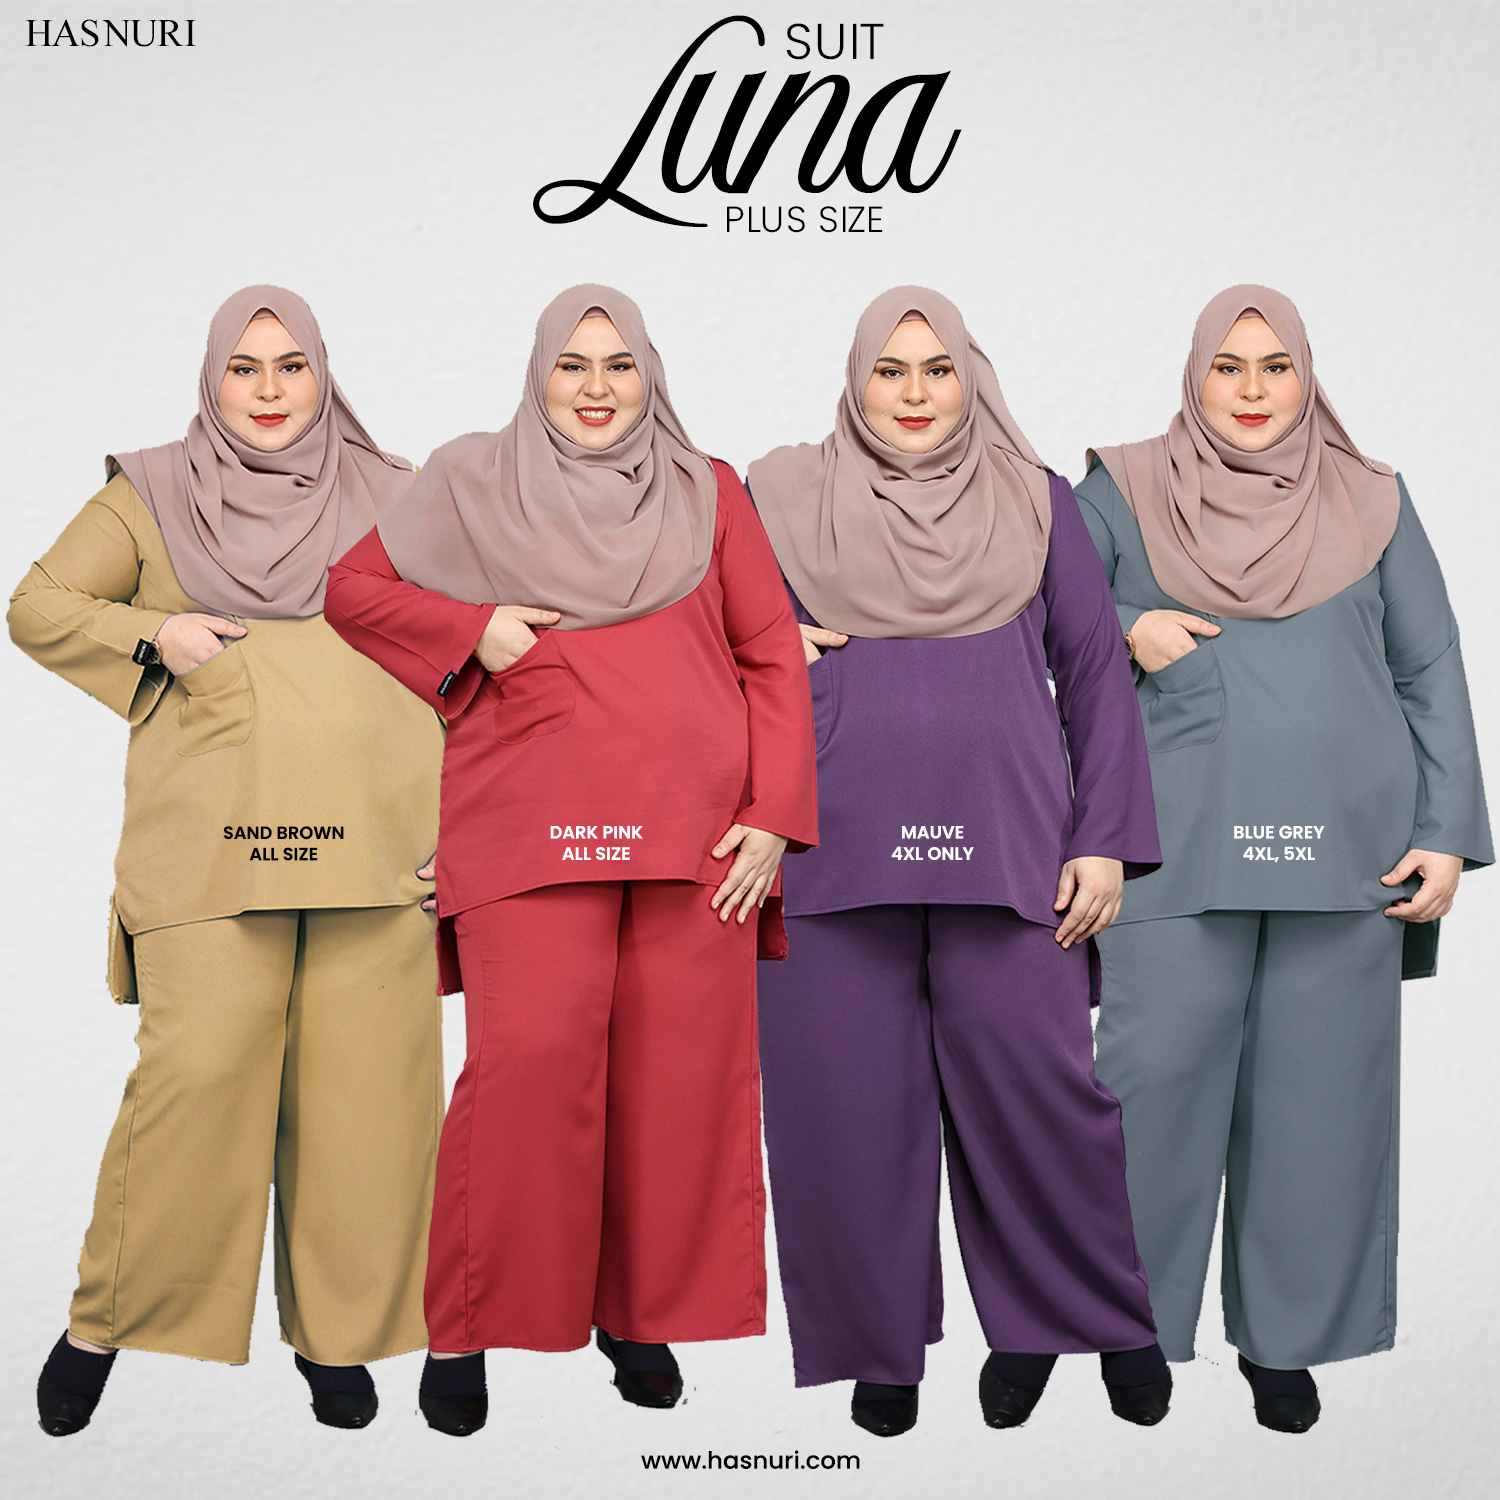 Suit Luna Plus Size - Dark Pink